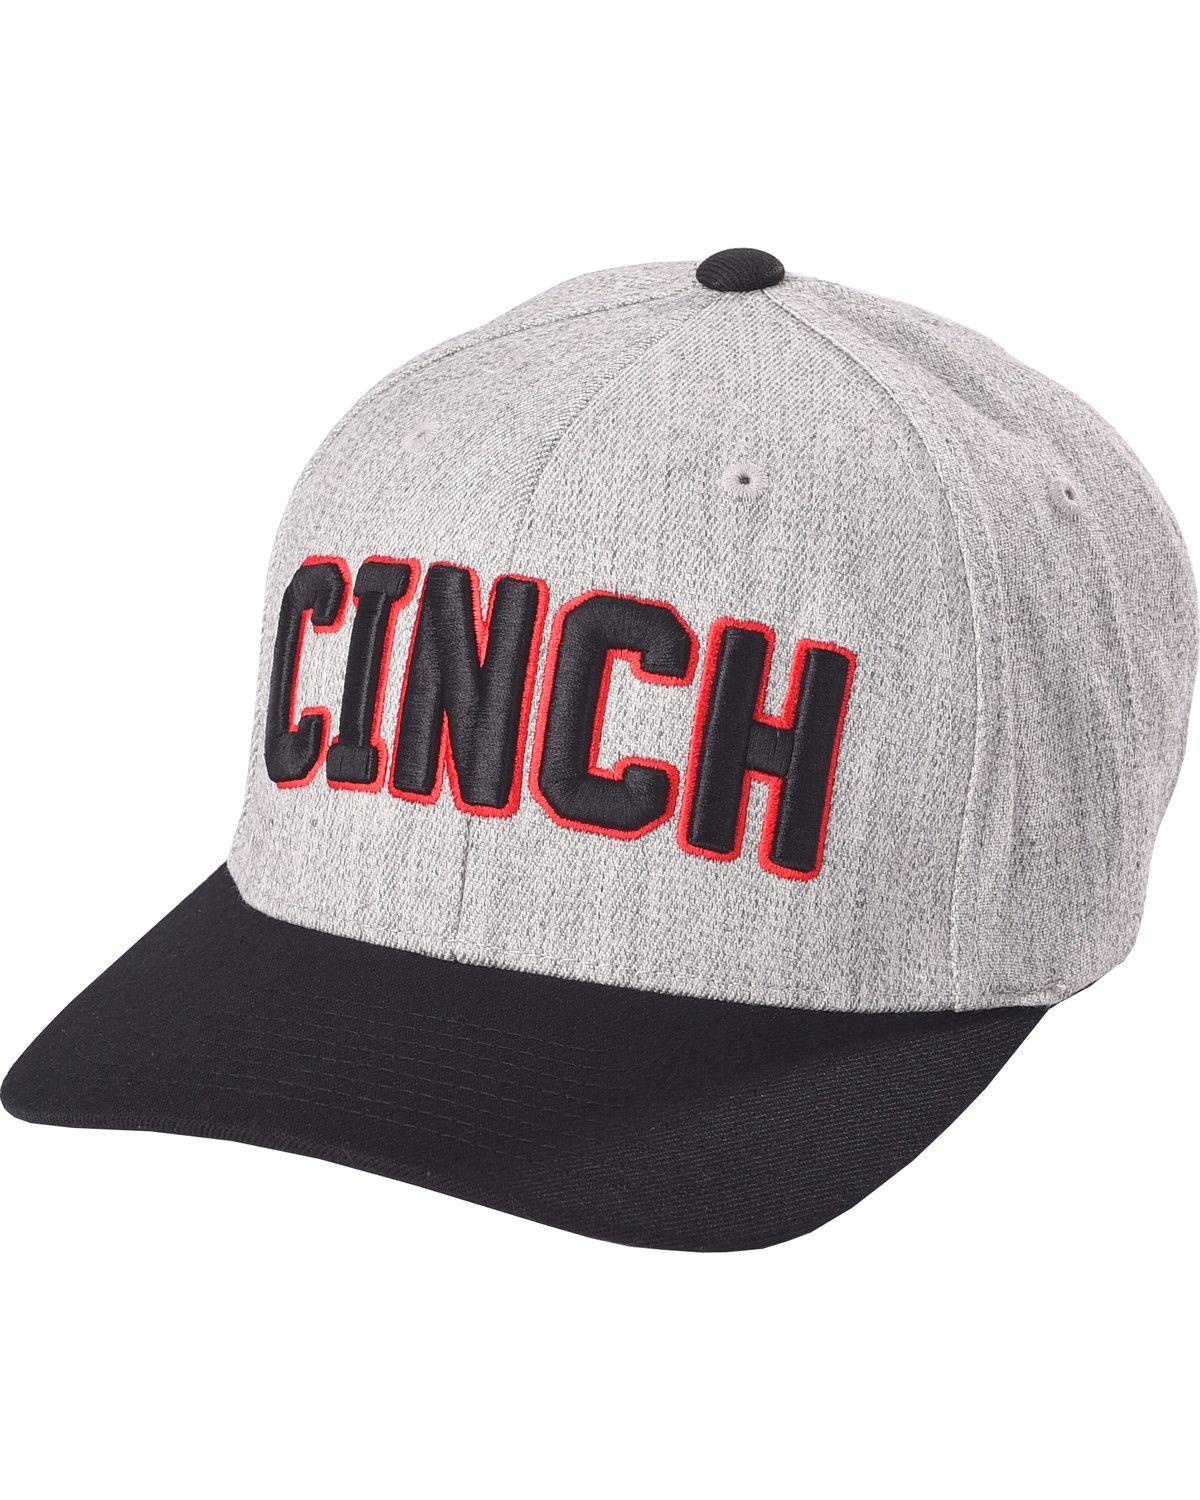 Cinch Logo - Cinch Men's Grey Flexfit 3D logo Baseball Cap